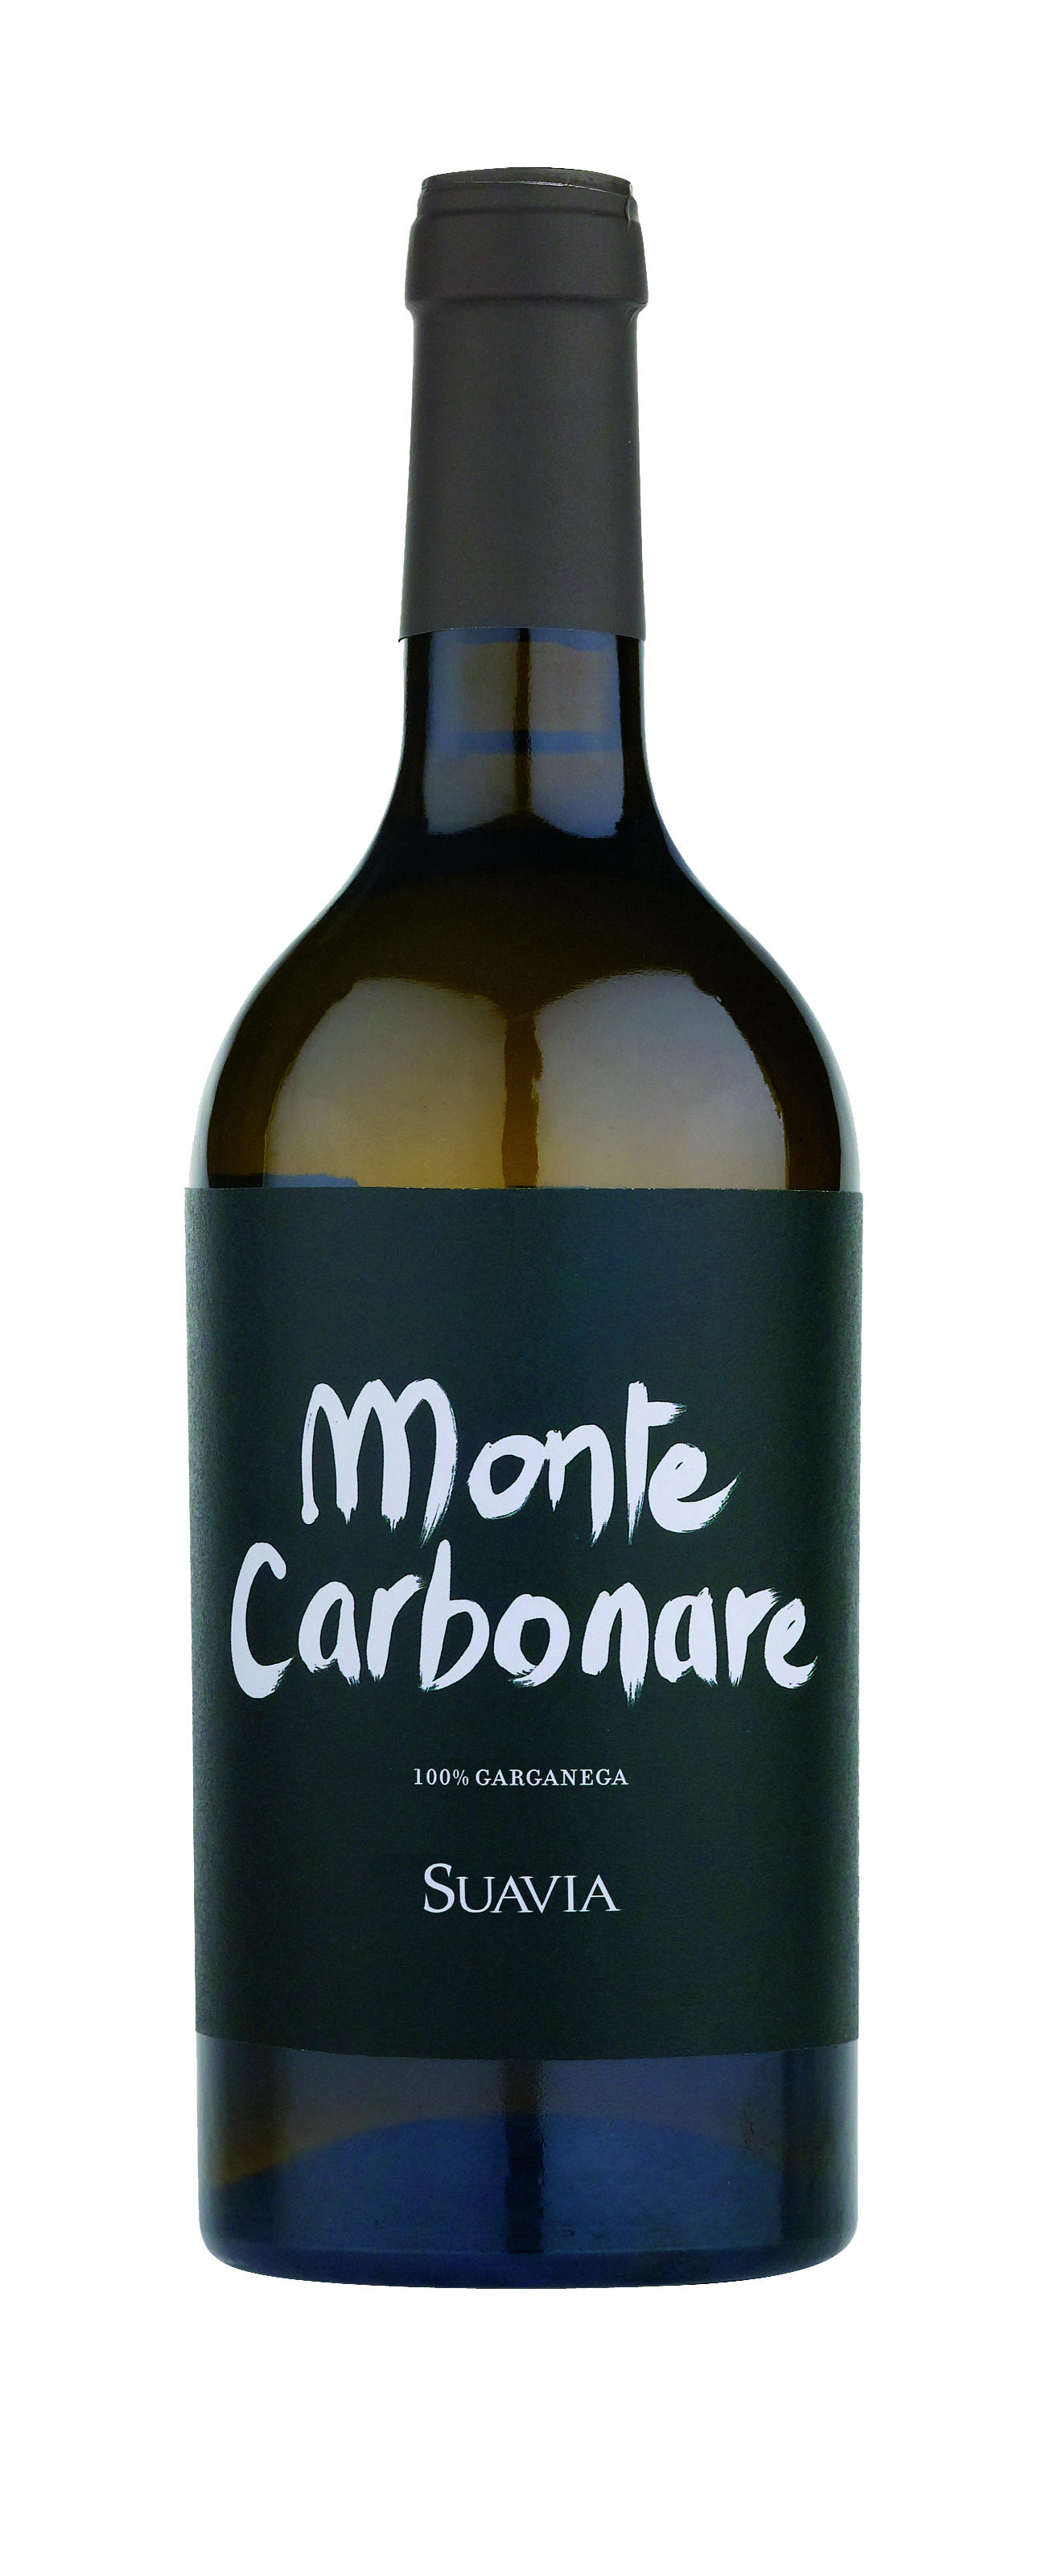 Monte Carbonare